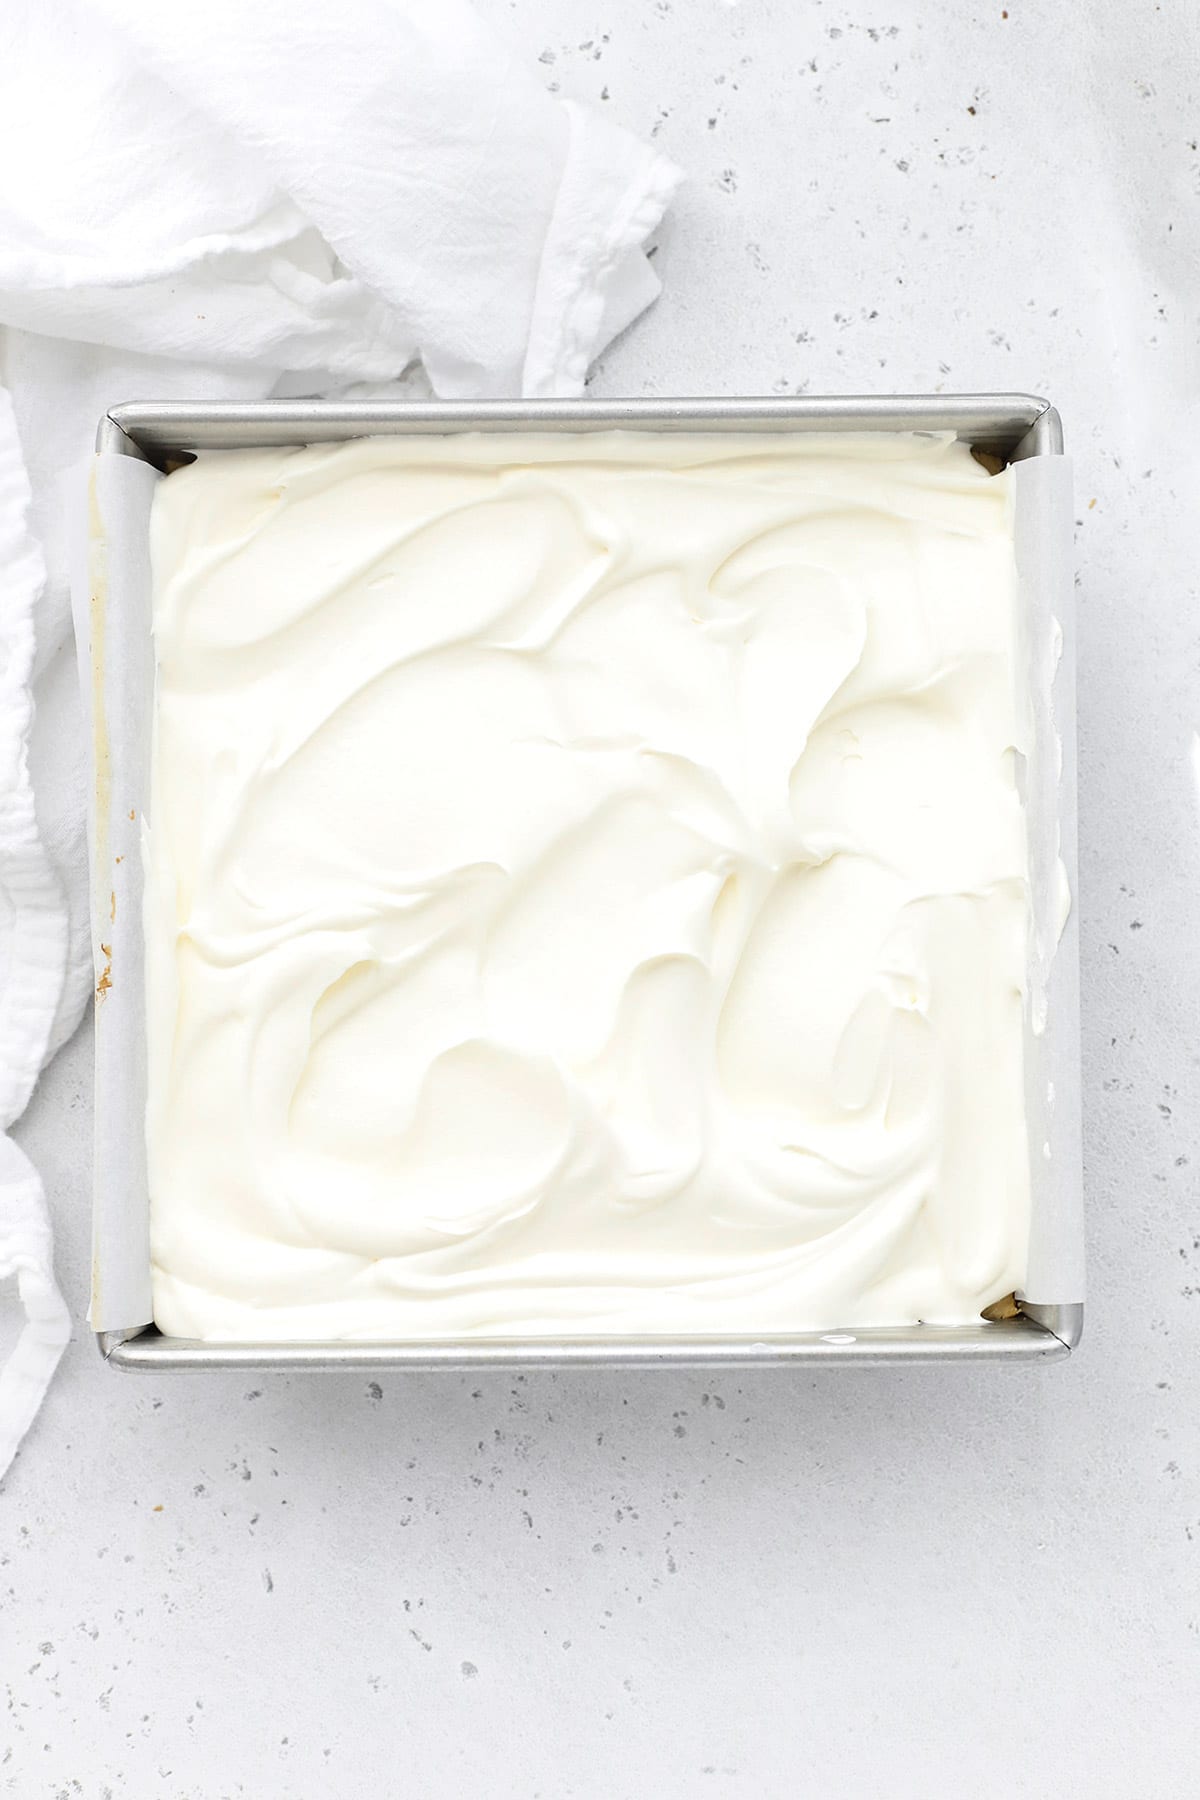 Swirls of whipped cream on top of gluten-free key lime pie bars